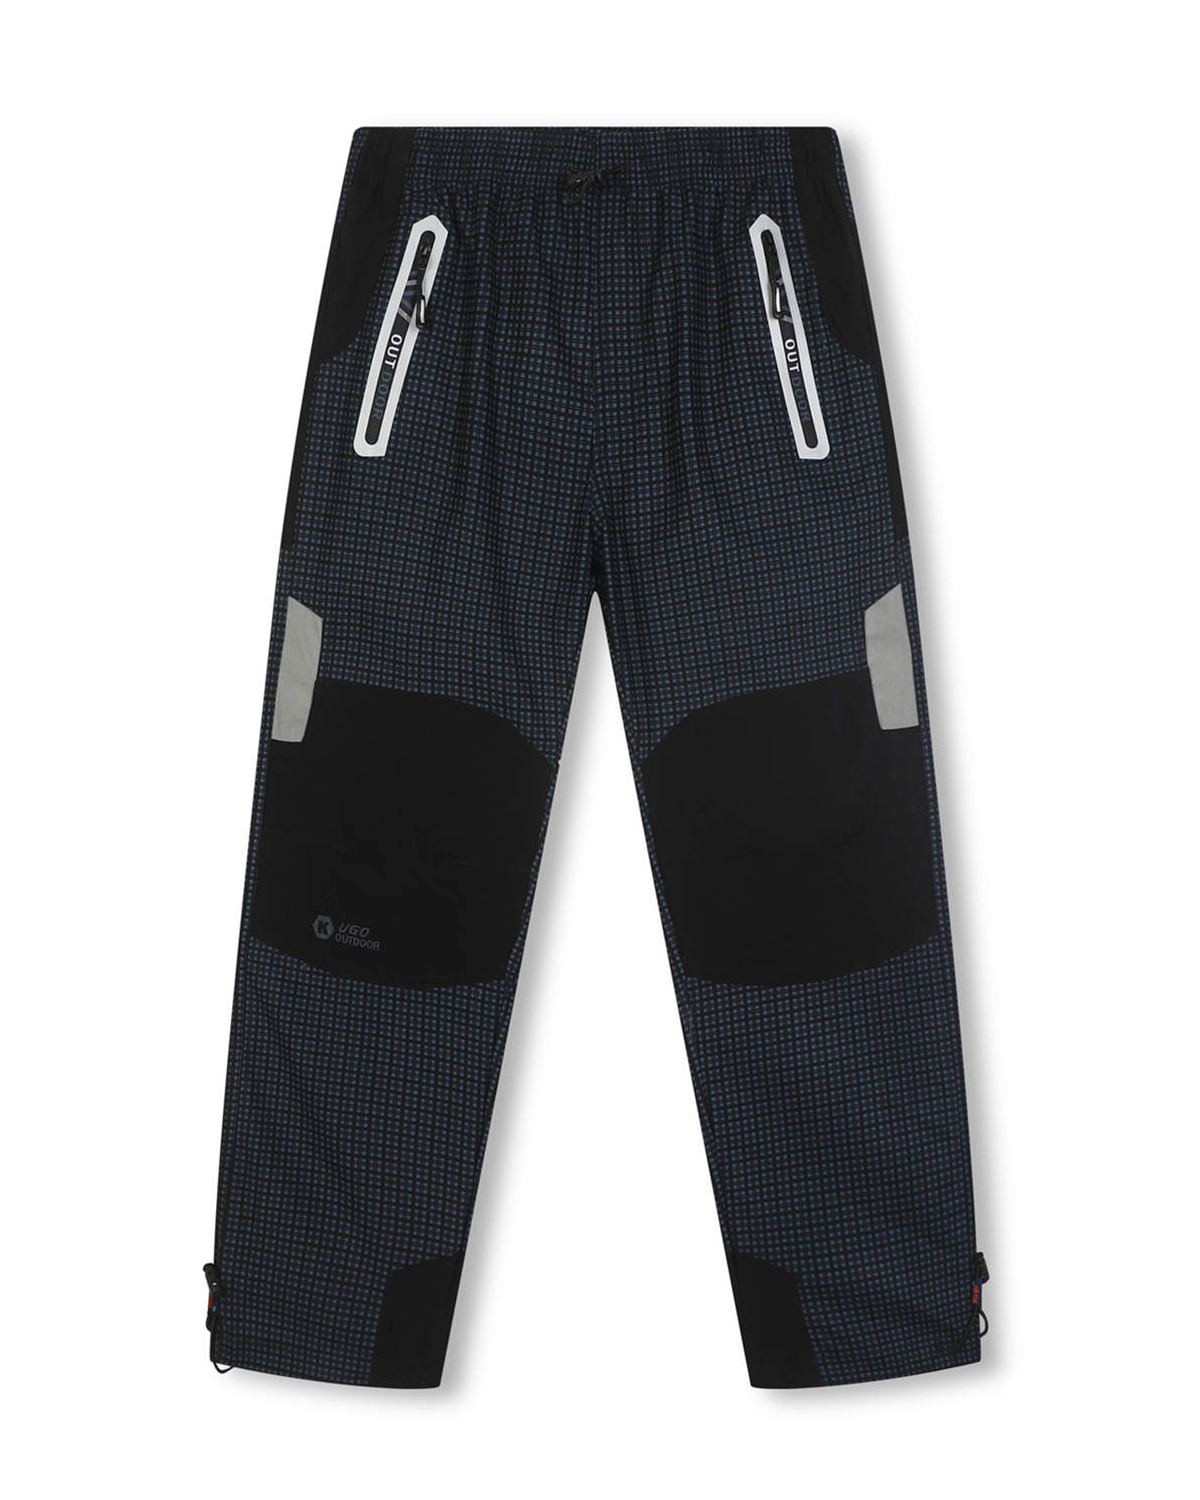 Chlapecké outdoorové kalhoty - KUGO G8556, šedomodrá / šedé kapsy Barva: Šedá, Velikost: 170